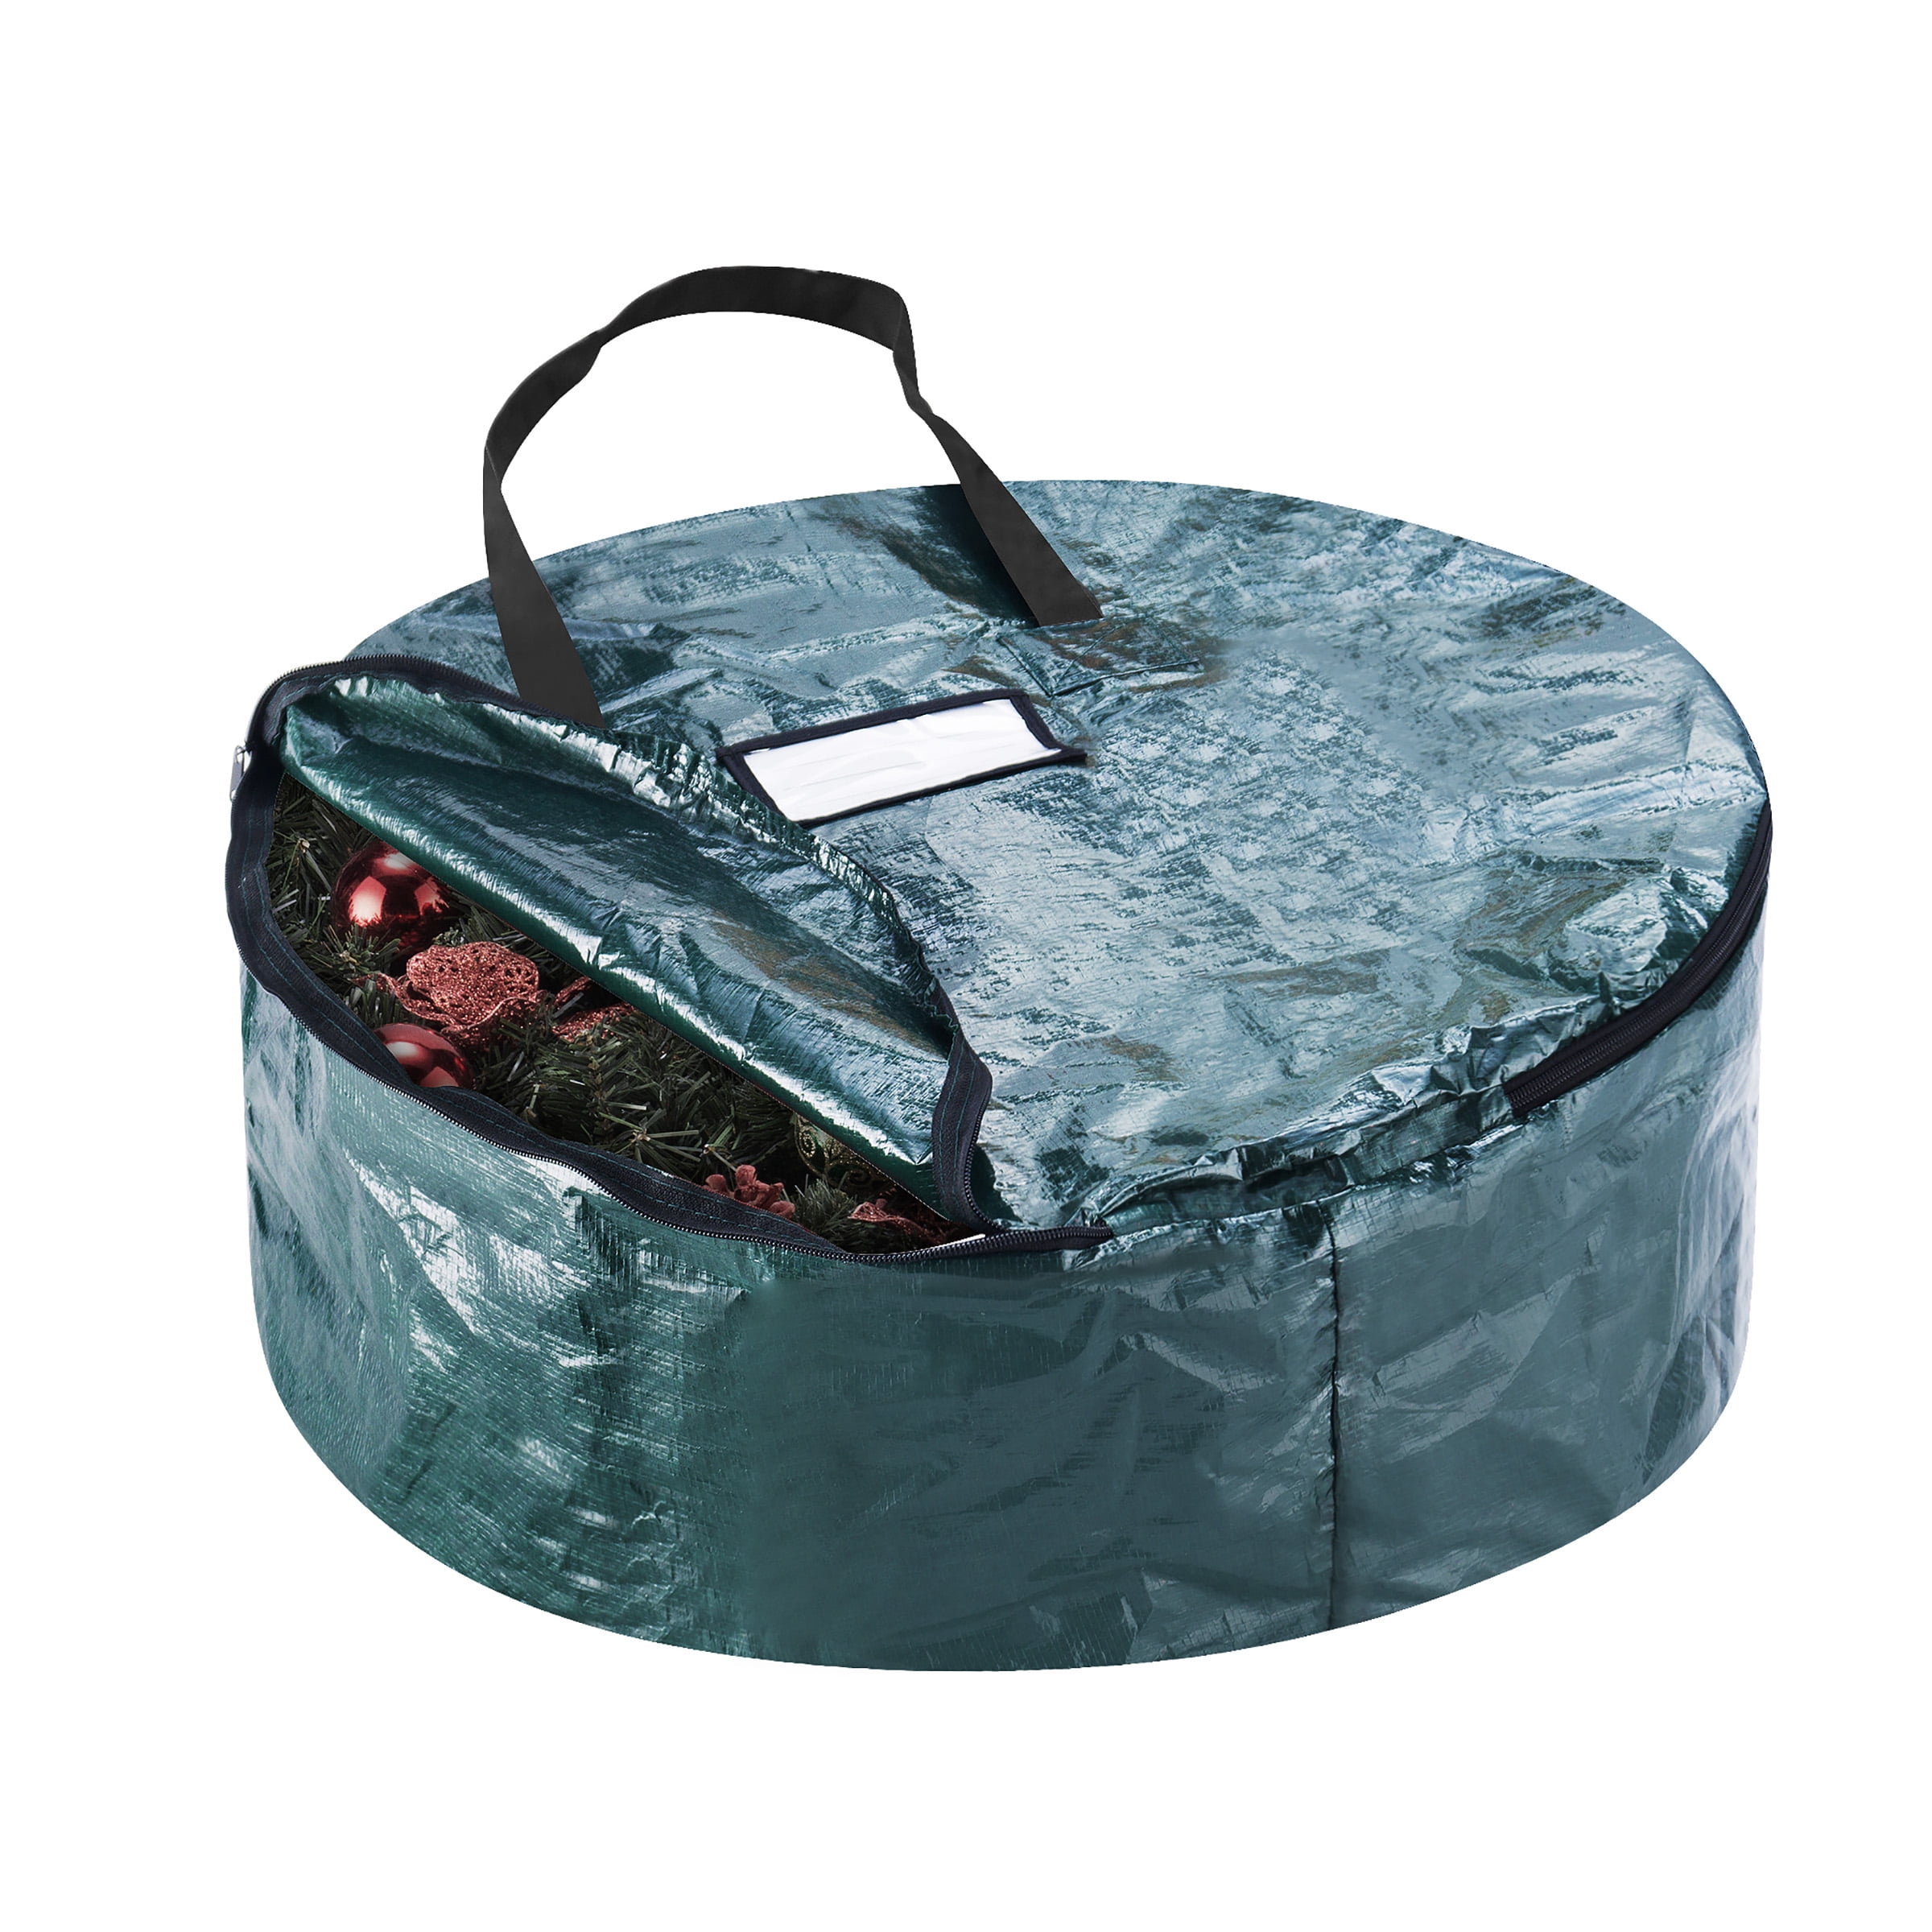 Ziploc® Holiday Quart Seal Top Storage Bags, 24 ct - Ralphs